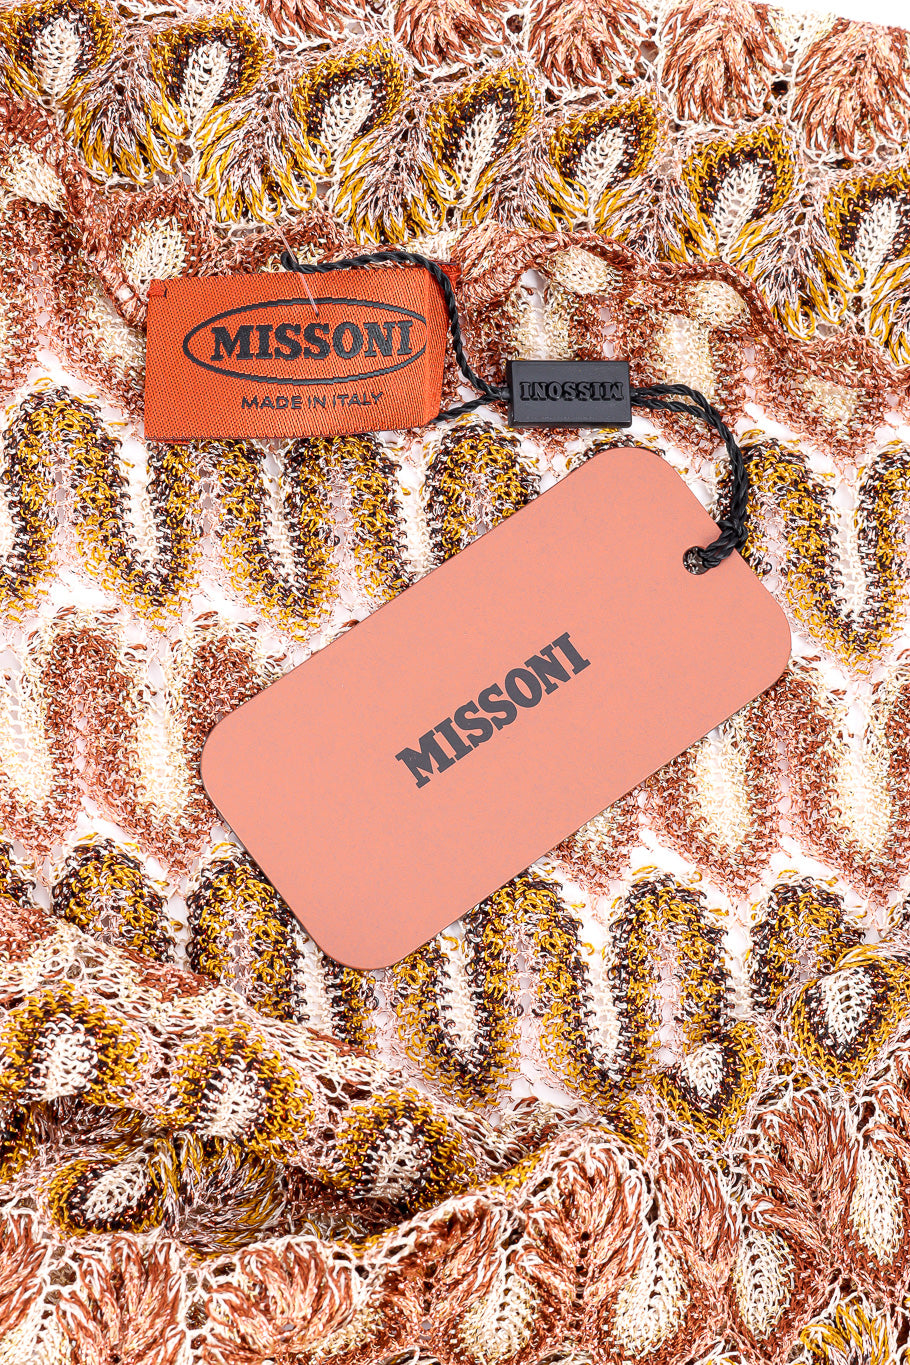 Missoni metallic knit dress designer label and tag @recessla